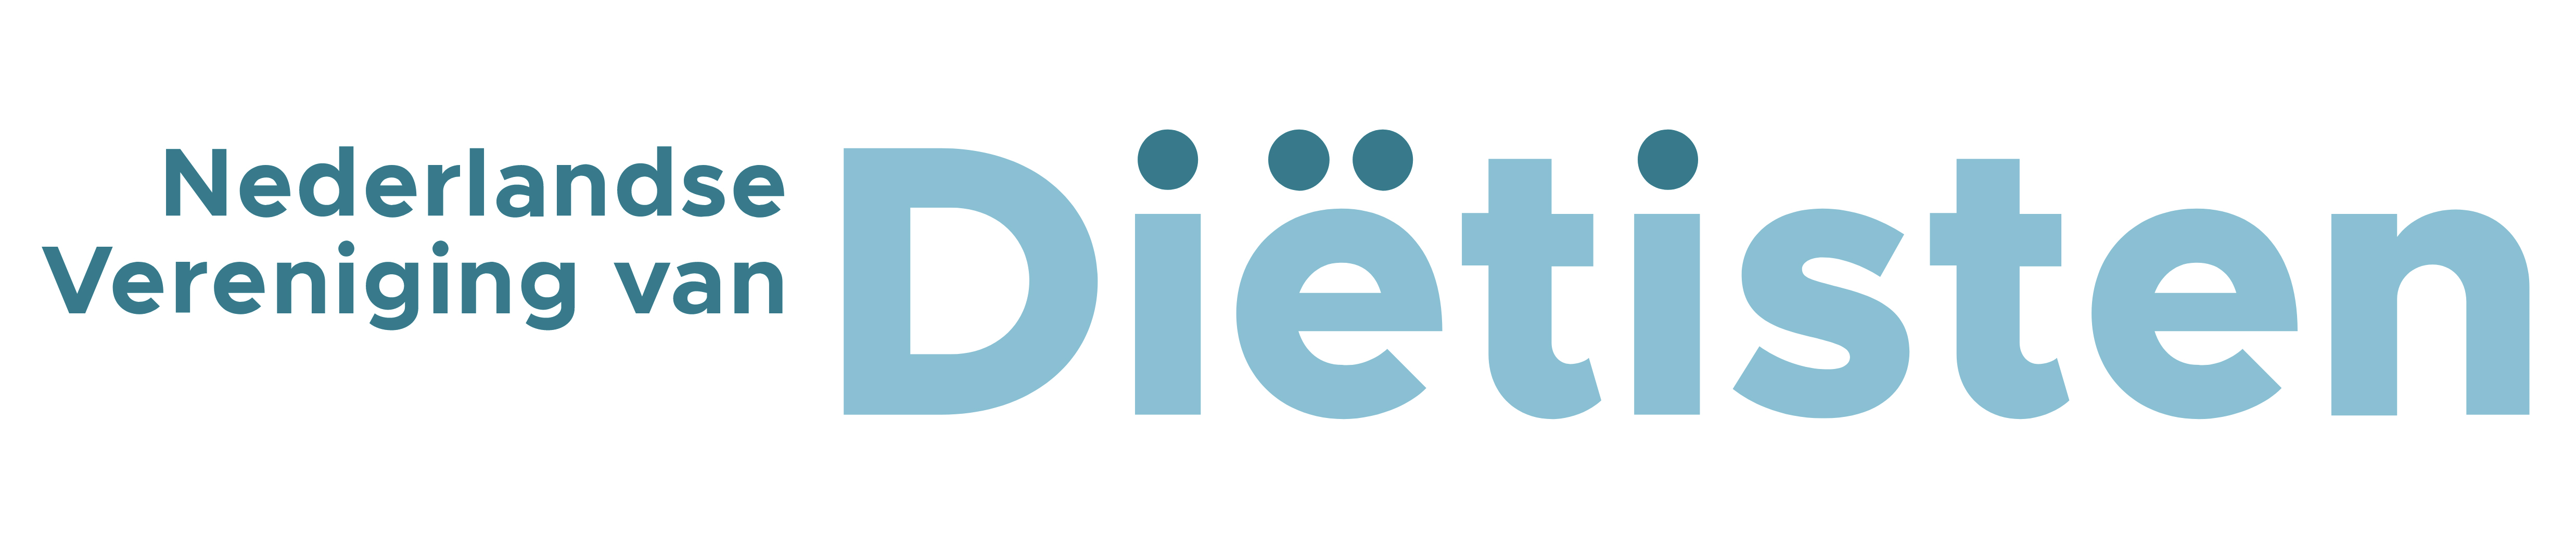 Nederlandse vereniging van dietisten